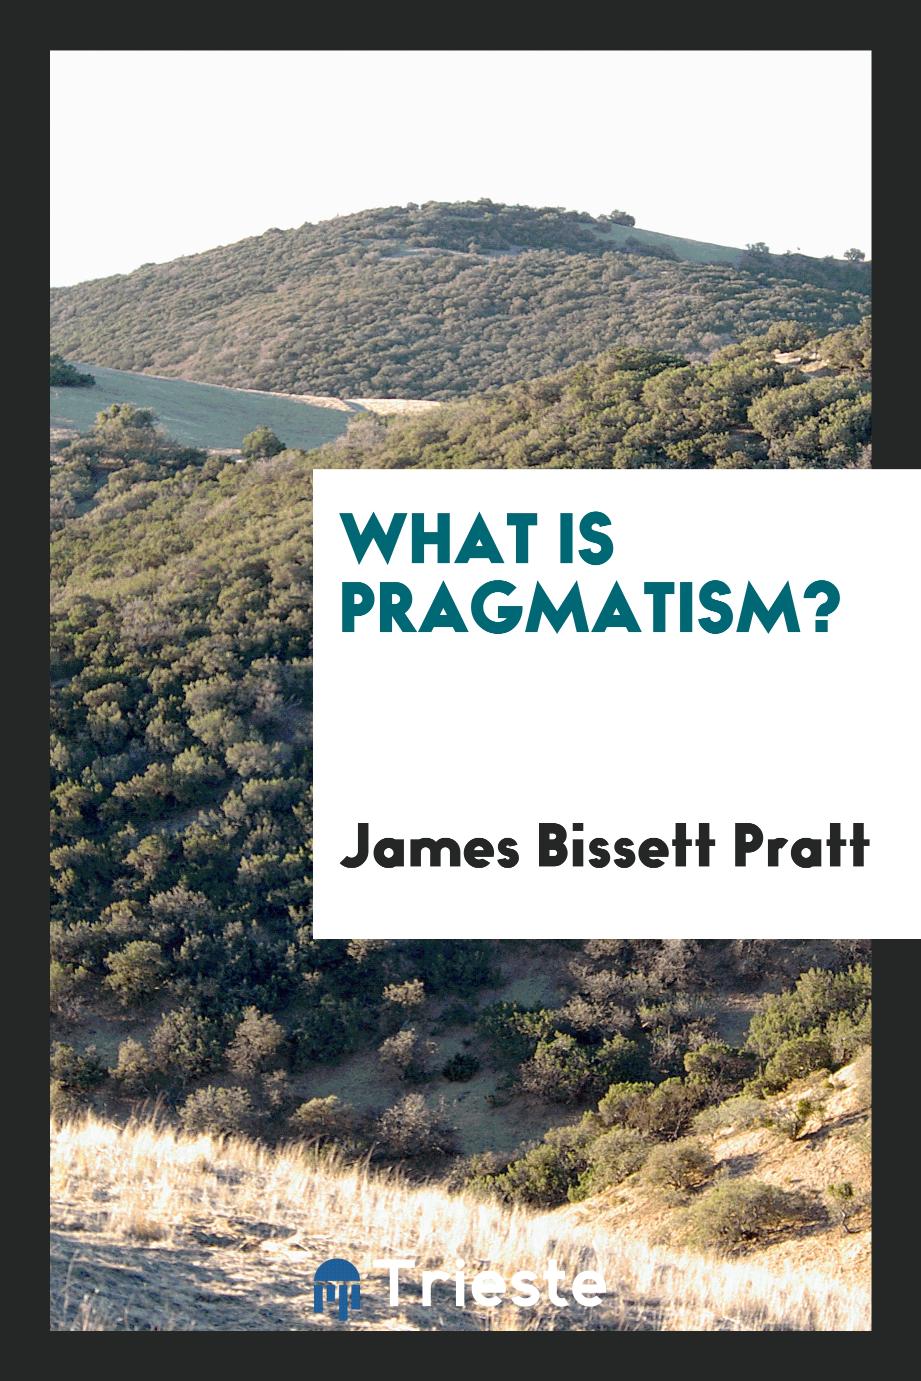 What is pragmatism?